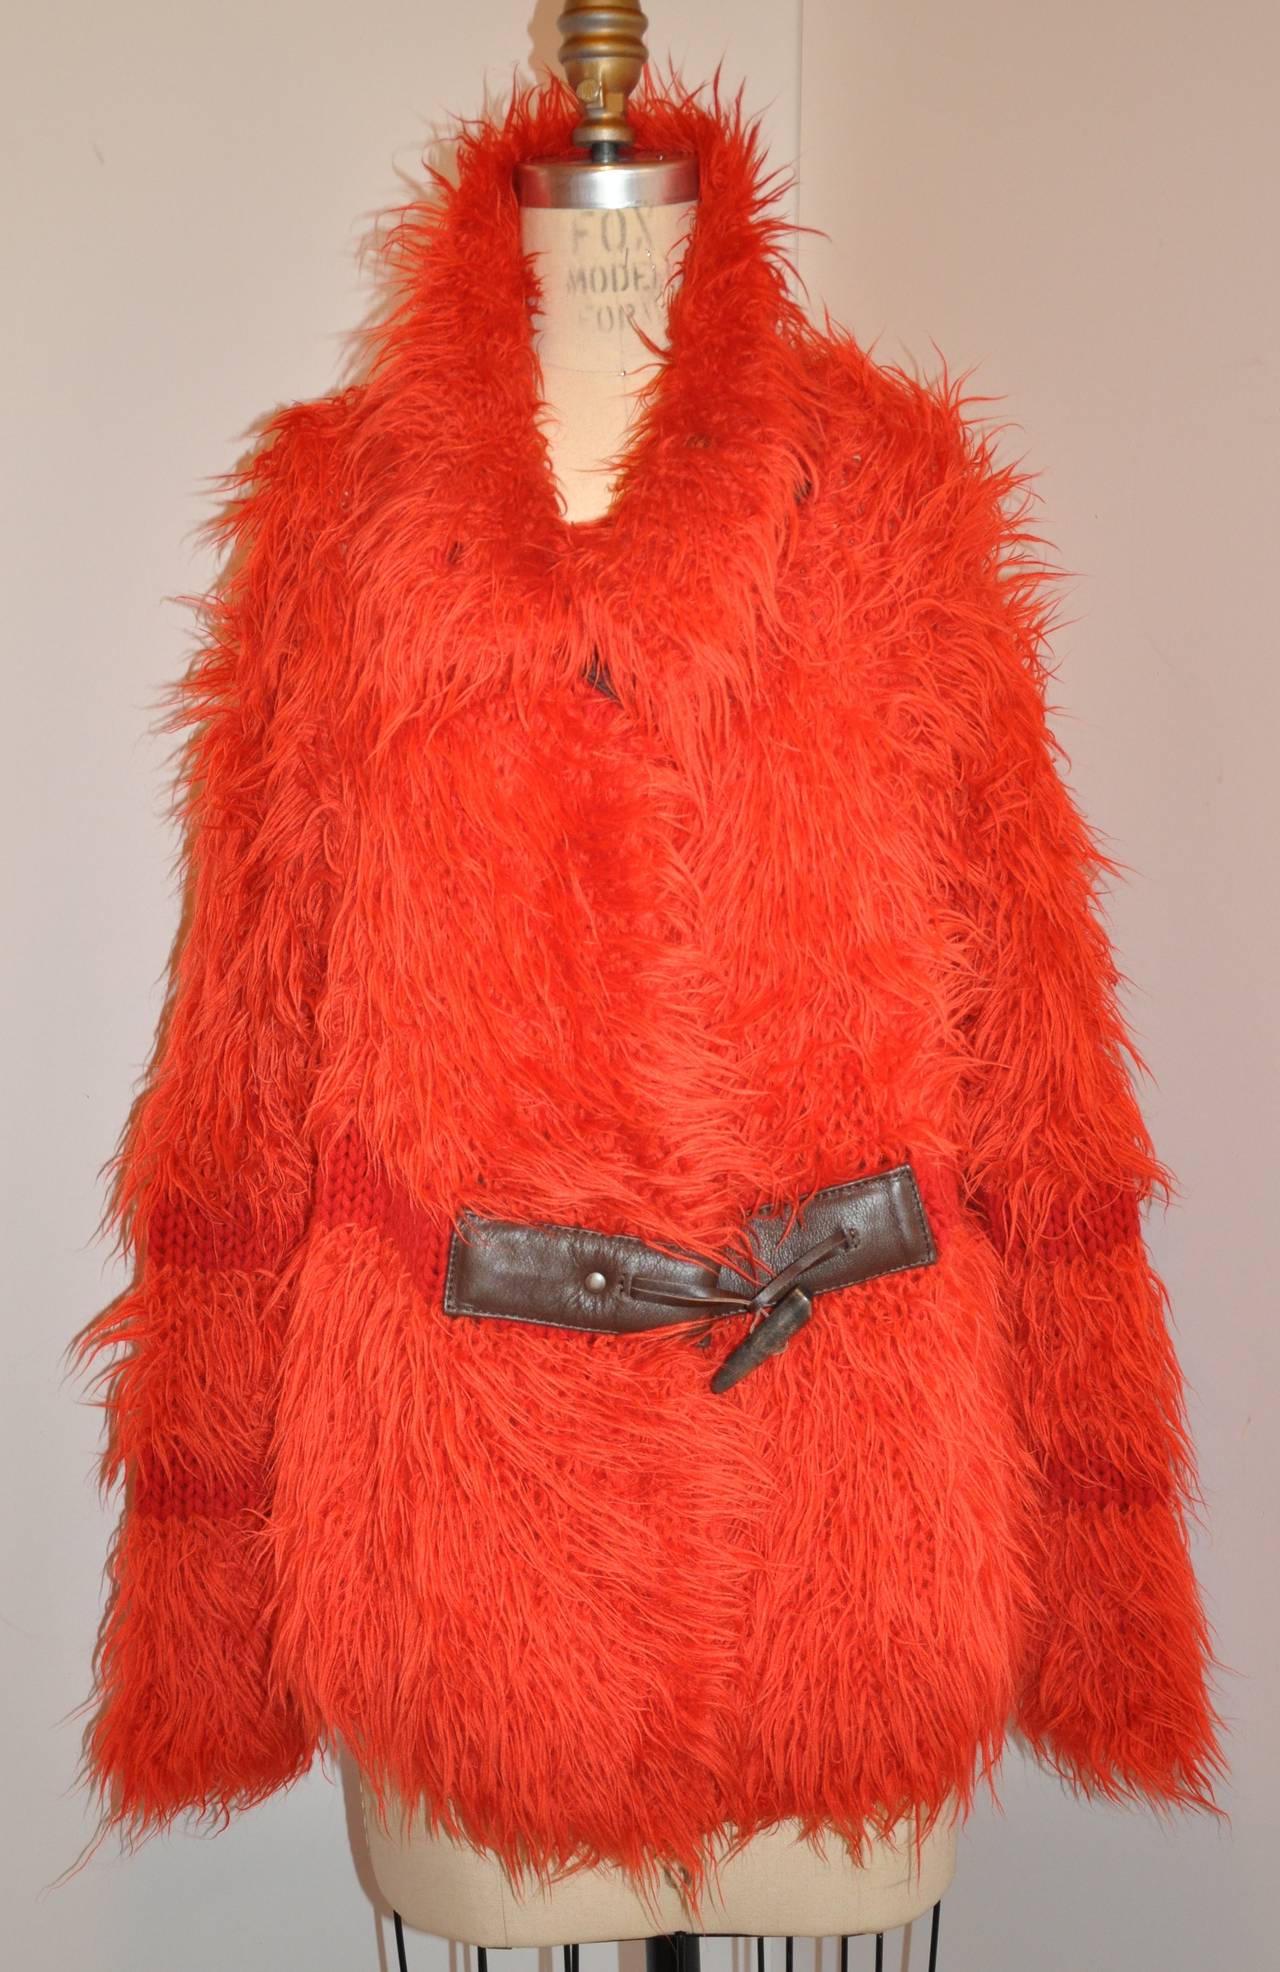 Pulloverjacke von Issey Miyake in kräftigem Rot mit Leder-Akzent im Zustand „Neu“ im Angebot in New York, NY